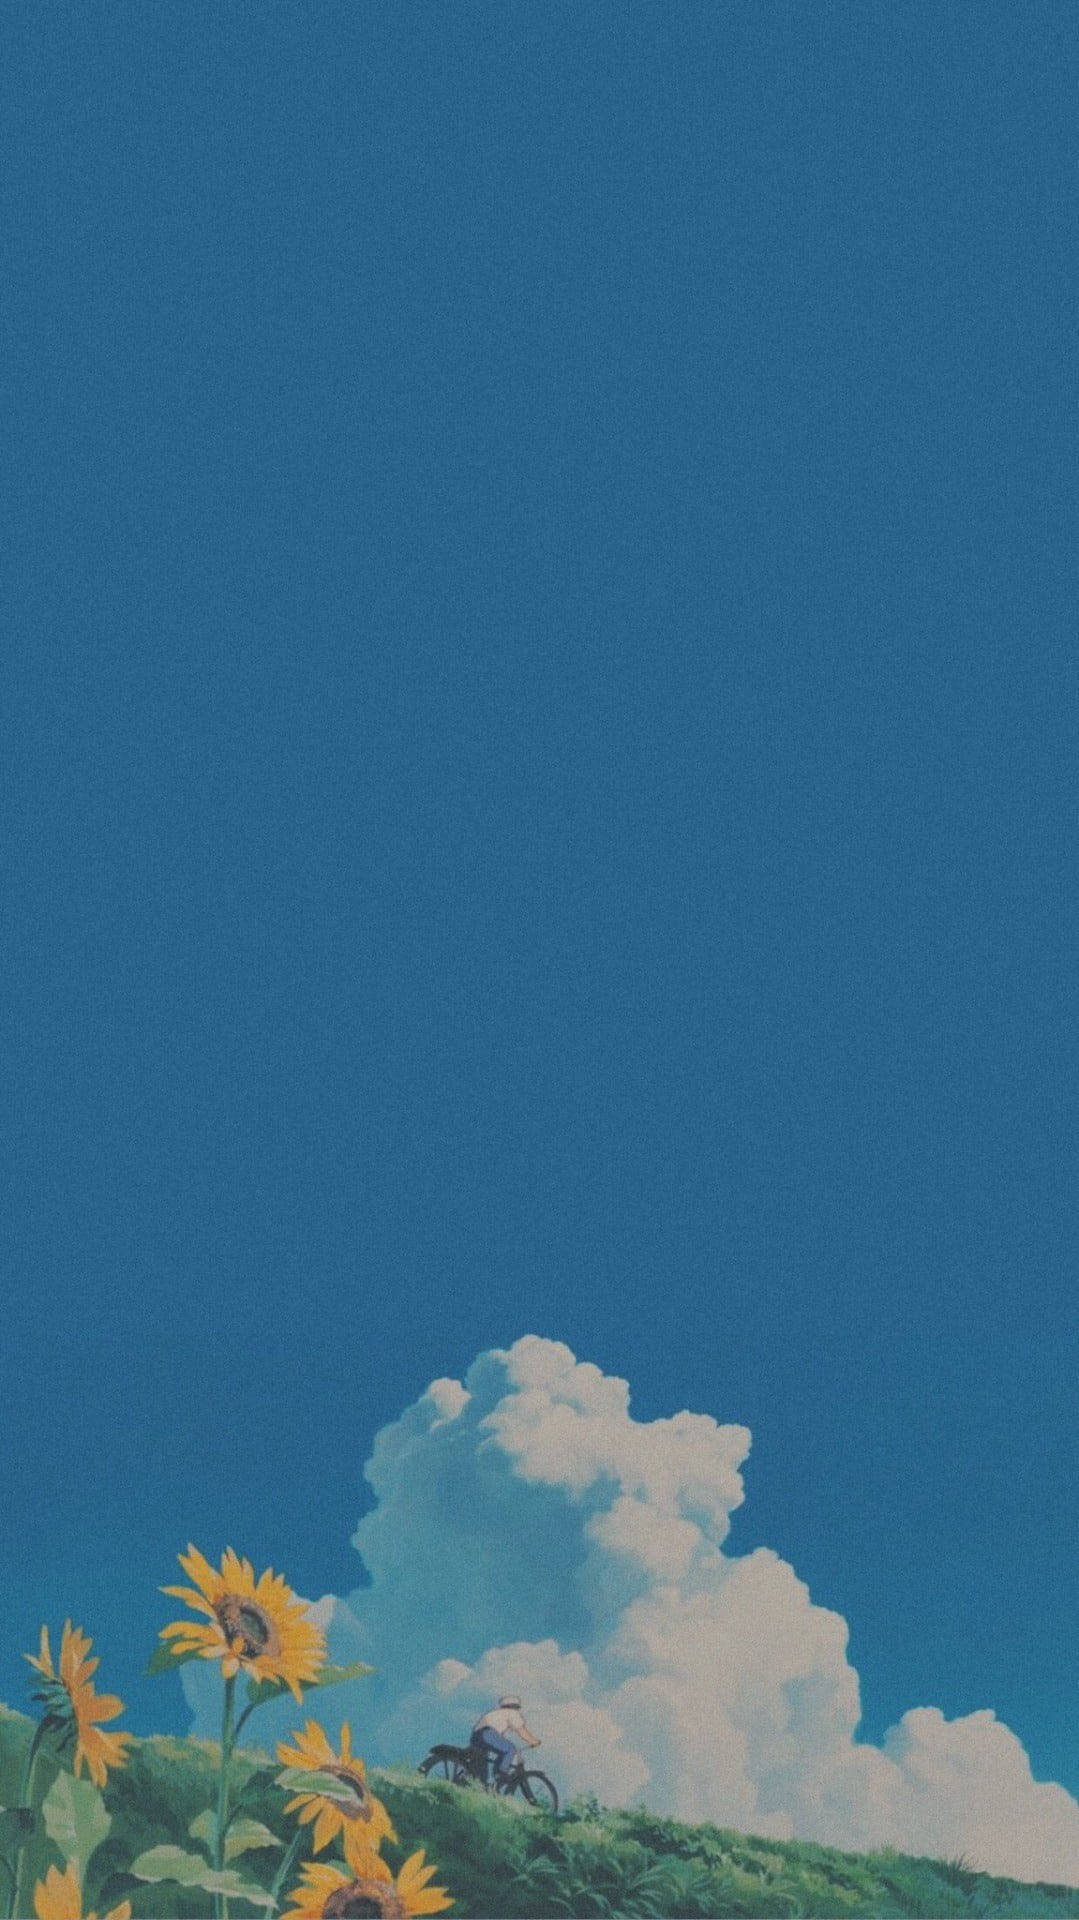 Anime aesthetic background blue sky with sunflowers and a bike - Blue anime